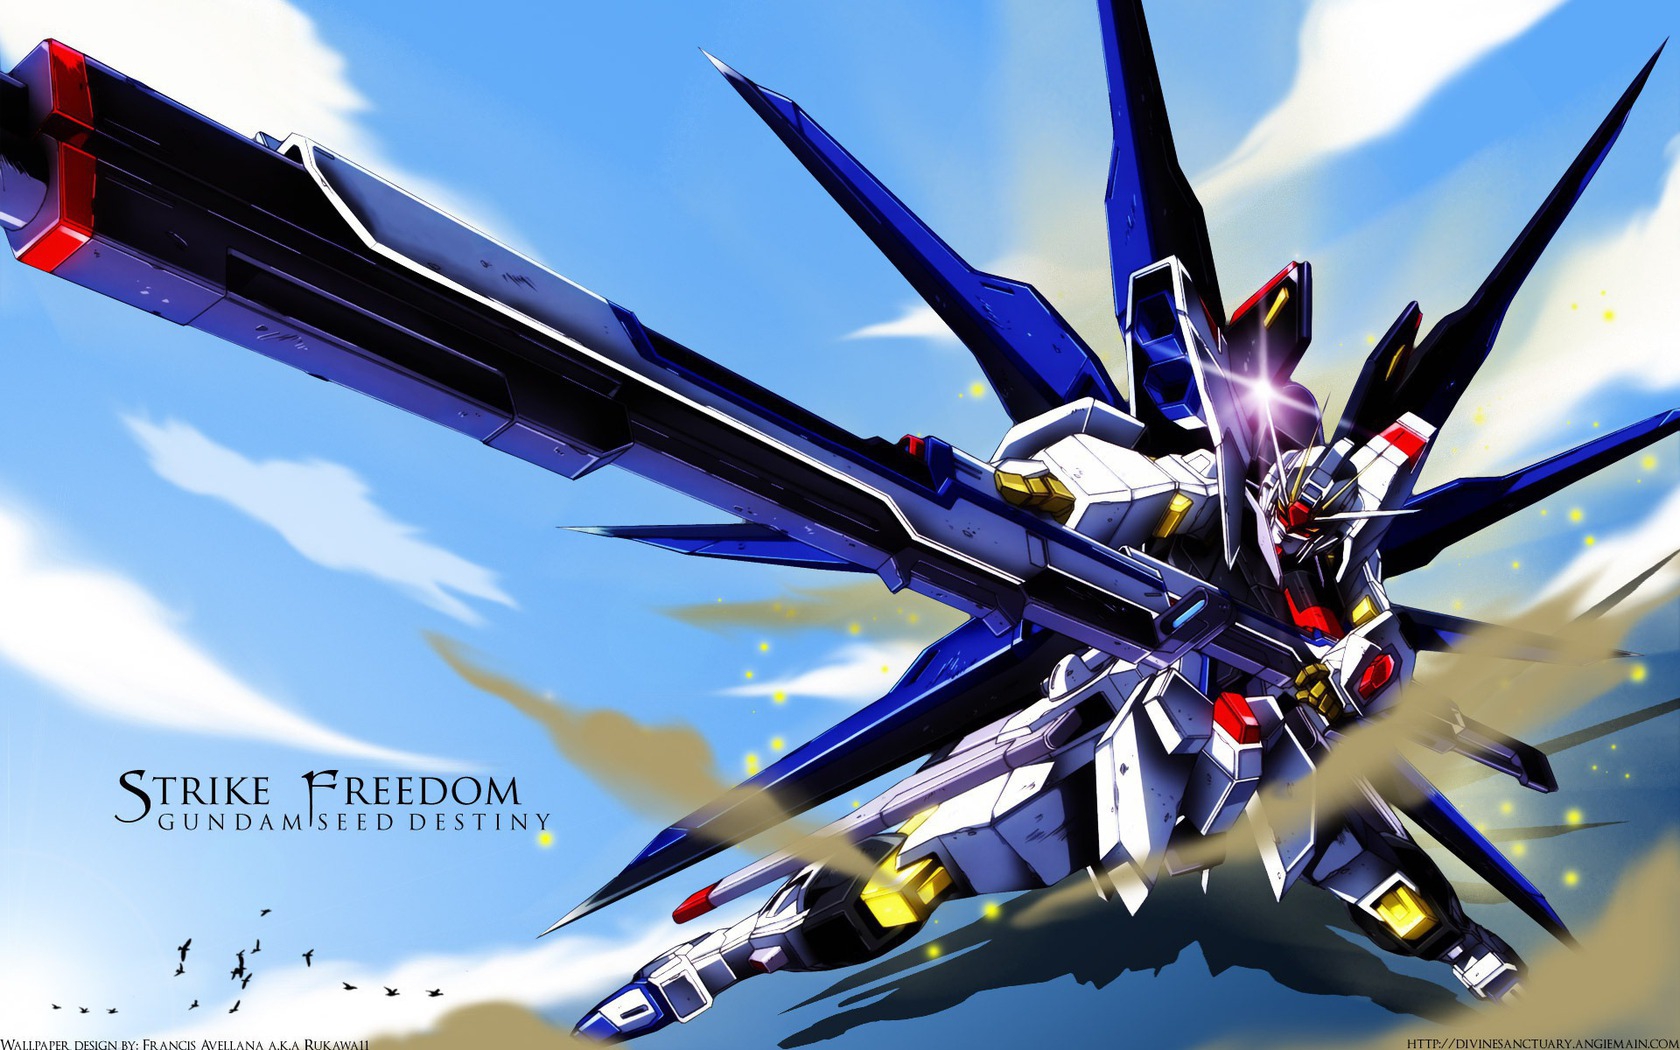 Gundam Res: 1680x1050 / Size:688kb. Views: 66891